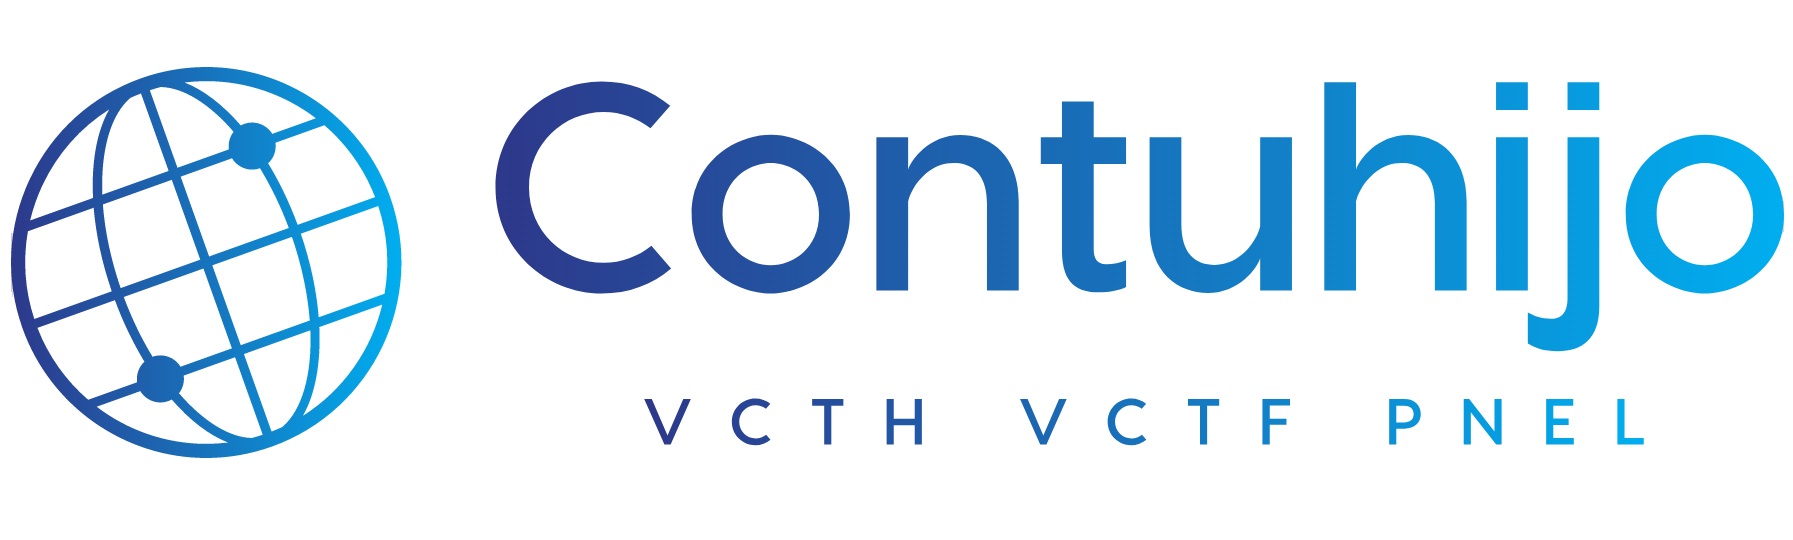 new-logo-contuhijo-003